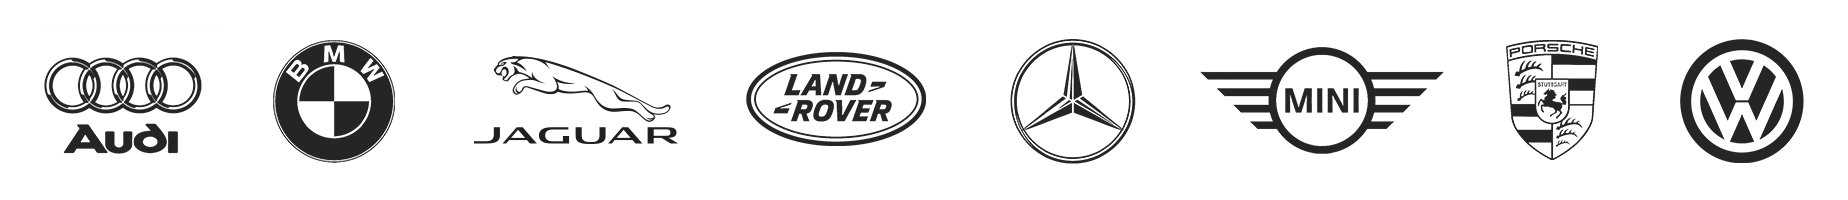 Black and white logos of European car manufacturers: Audi, BMW, Jaguar, Land Rover, Mercedes, Mini Cooper, Porsche and VW.